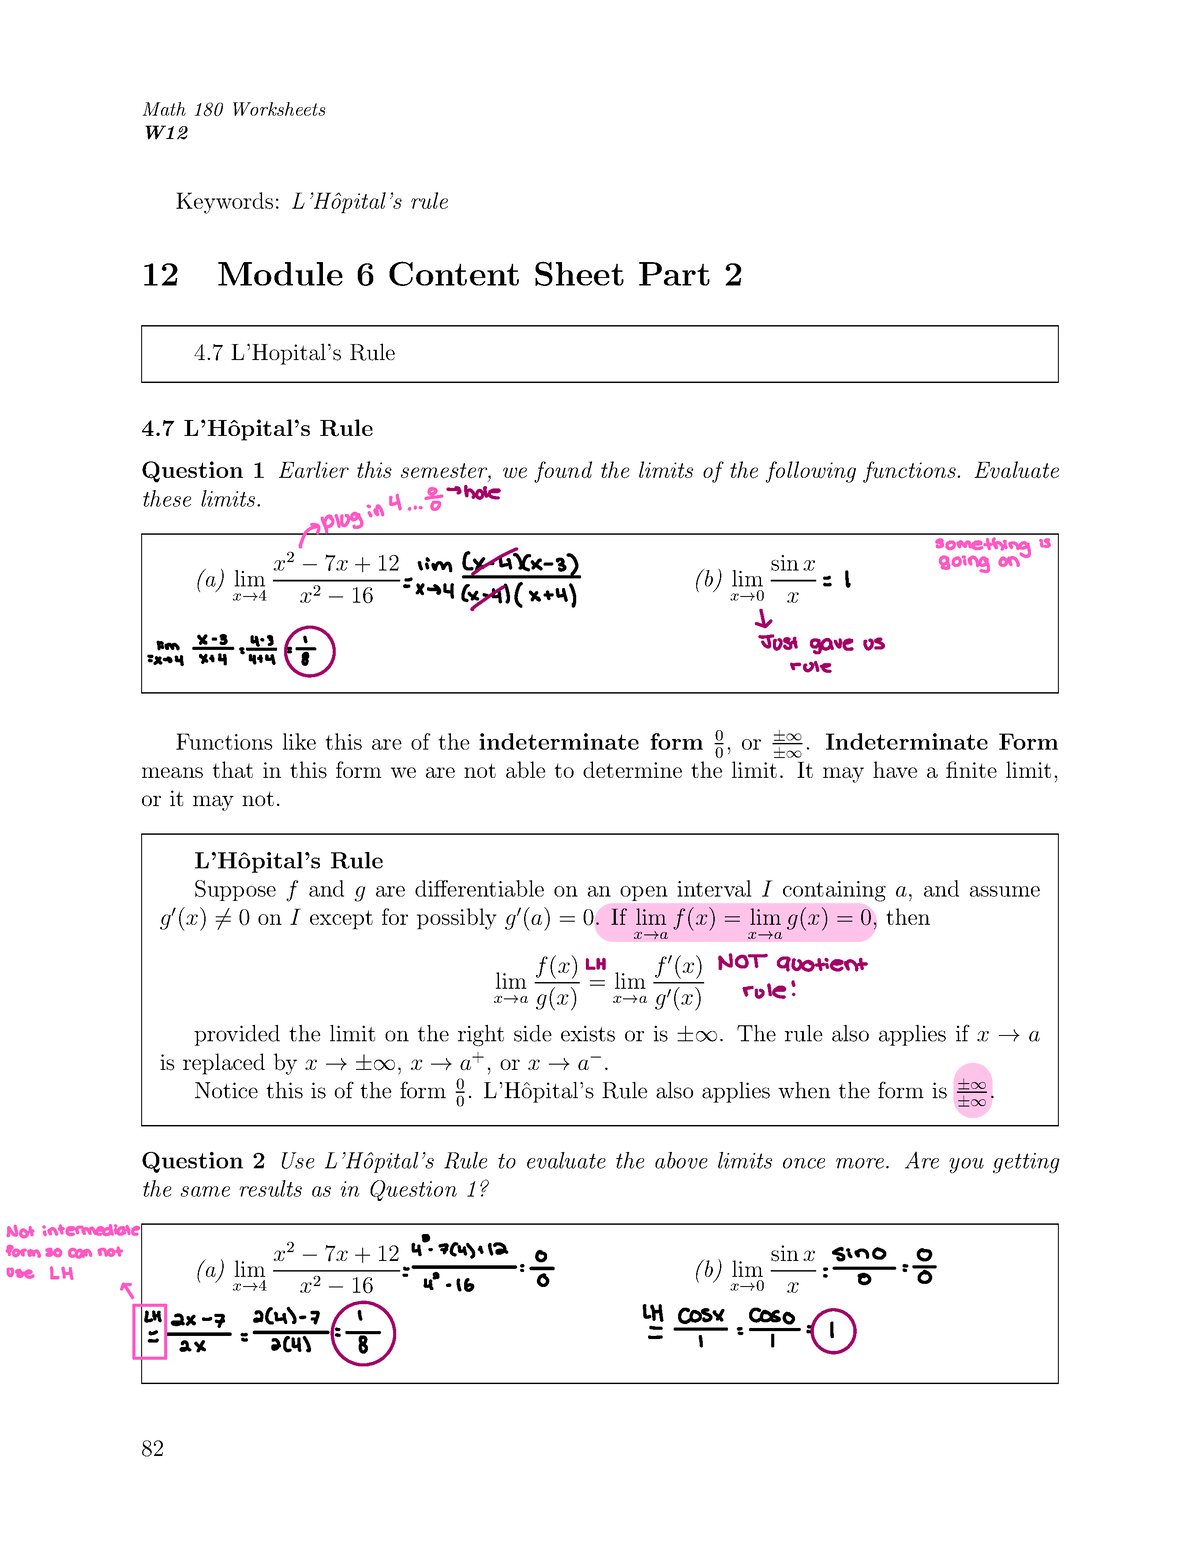 module-6-part-ii-math-180-uic-studocu